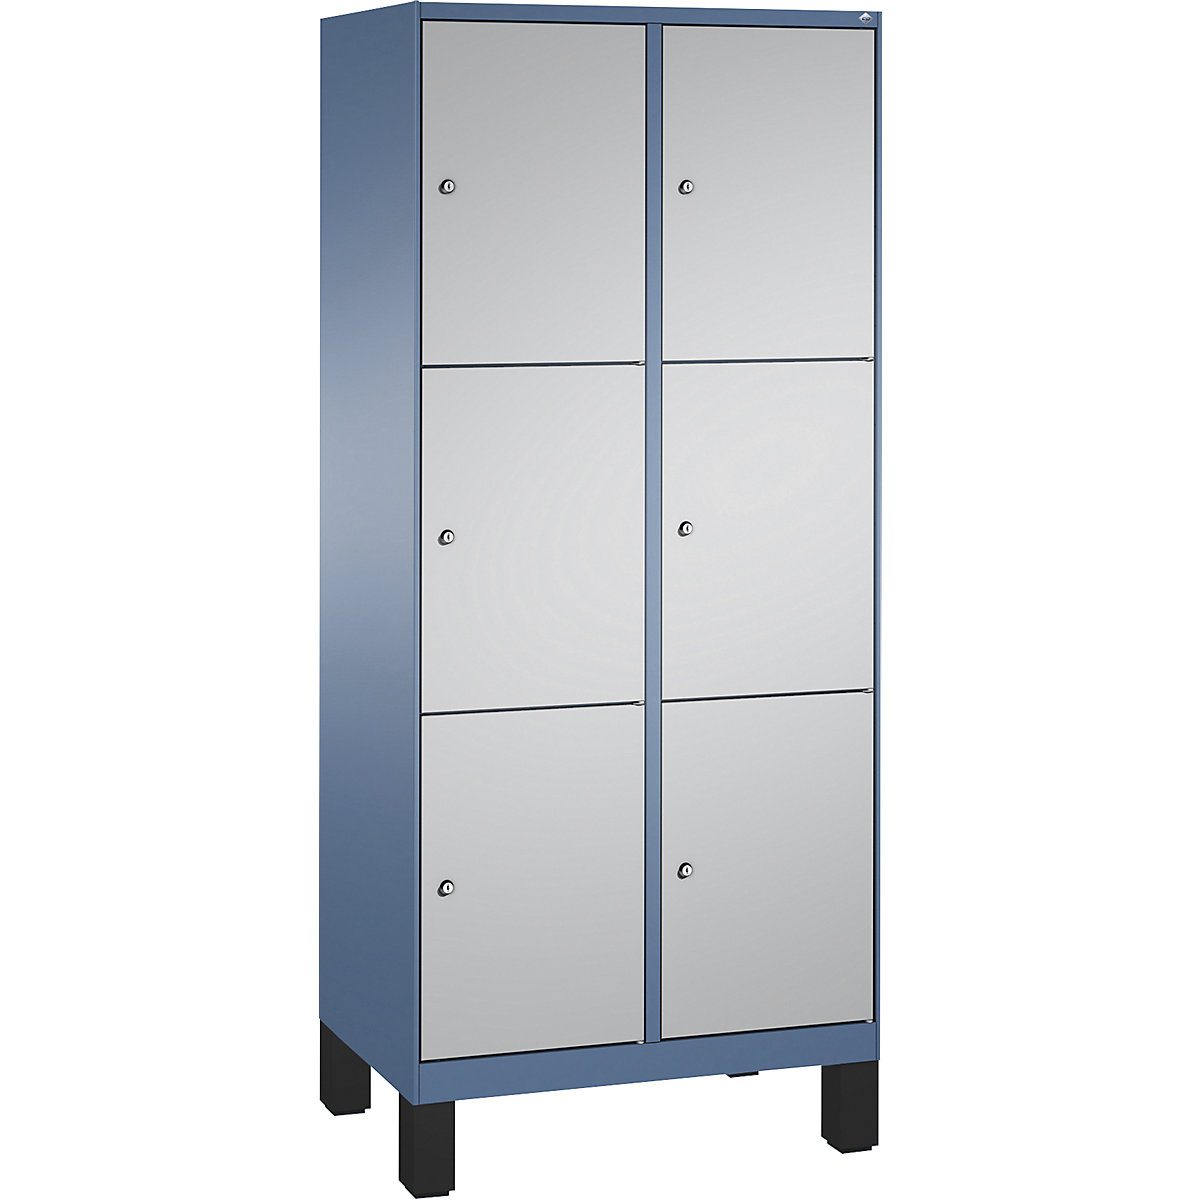 EVOLO locker unit, with feet – C+P, 2 compartments, 3 shelf compartments each, compartment width 400 mm, distant blue / white aluminium